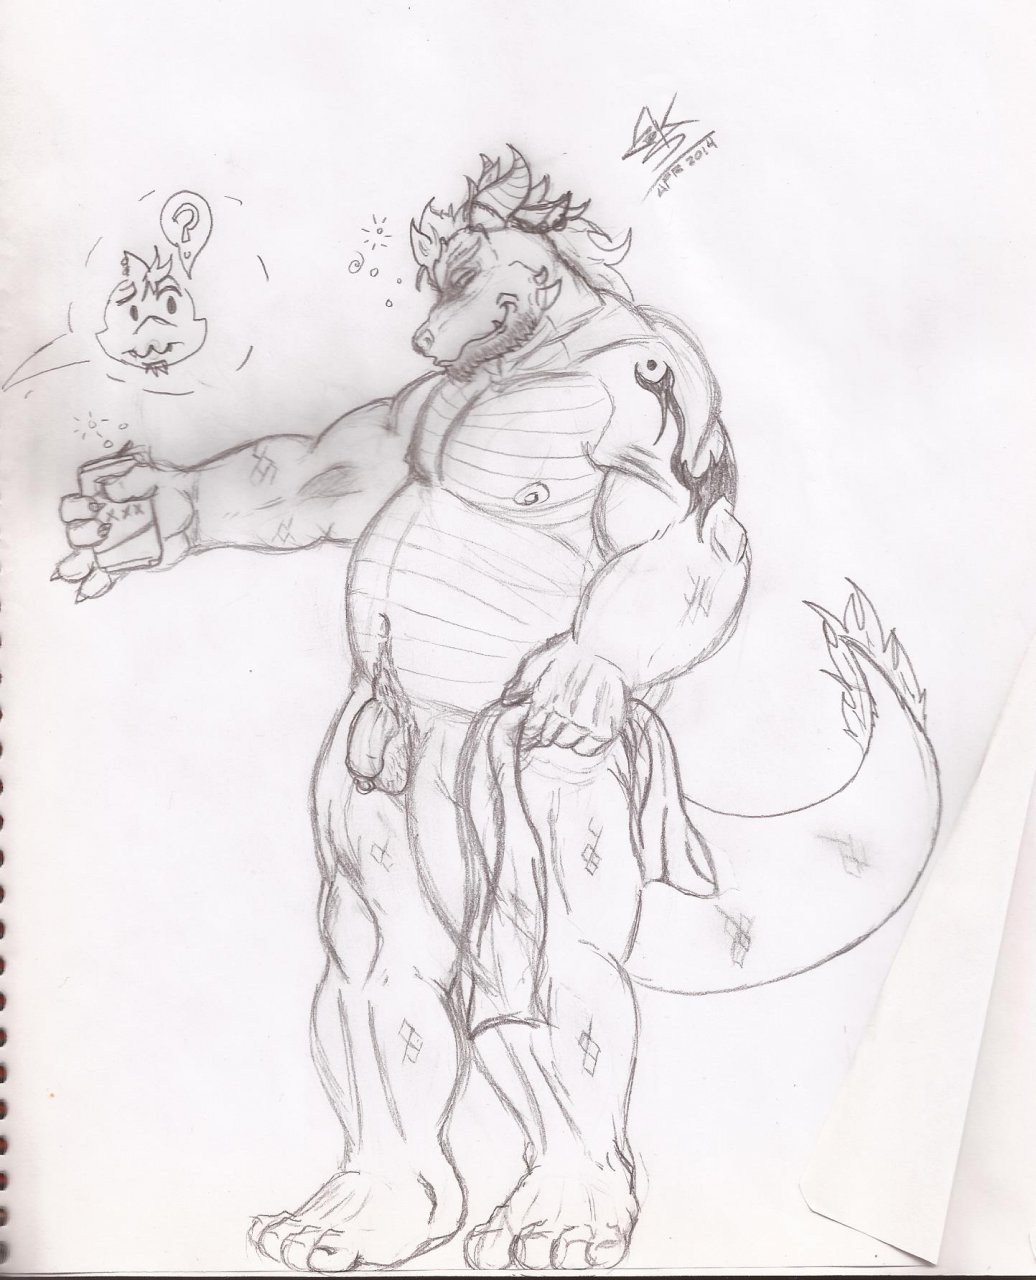 belly big_(disambiguation) dragon lok_the_dragon manly musclegut overweight slightly_chubby vanshart